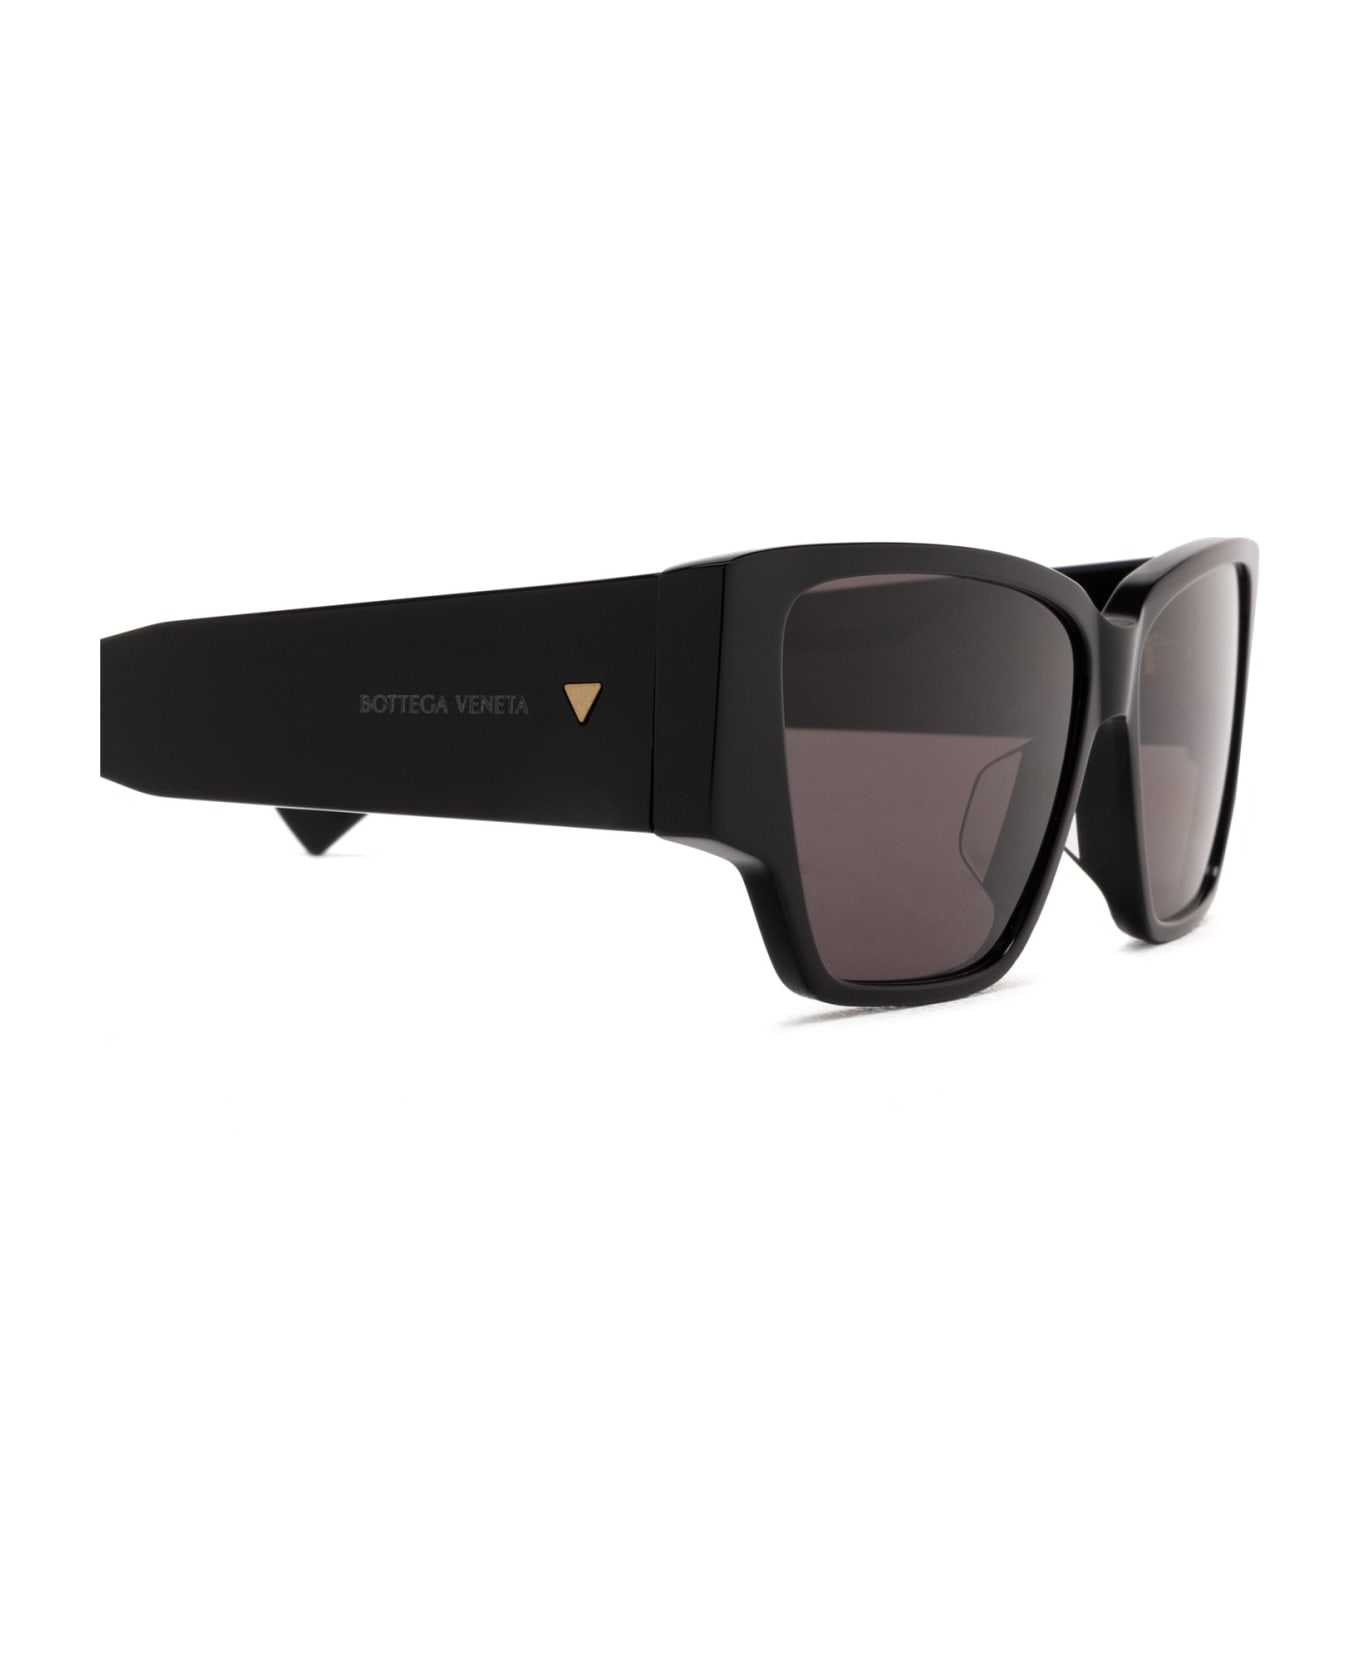 Bottega Veneta Eyewear Bv1285s Black Sunglasses - Black サングラス